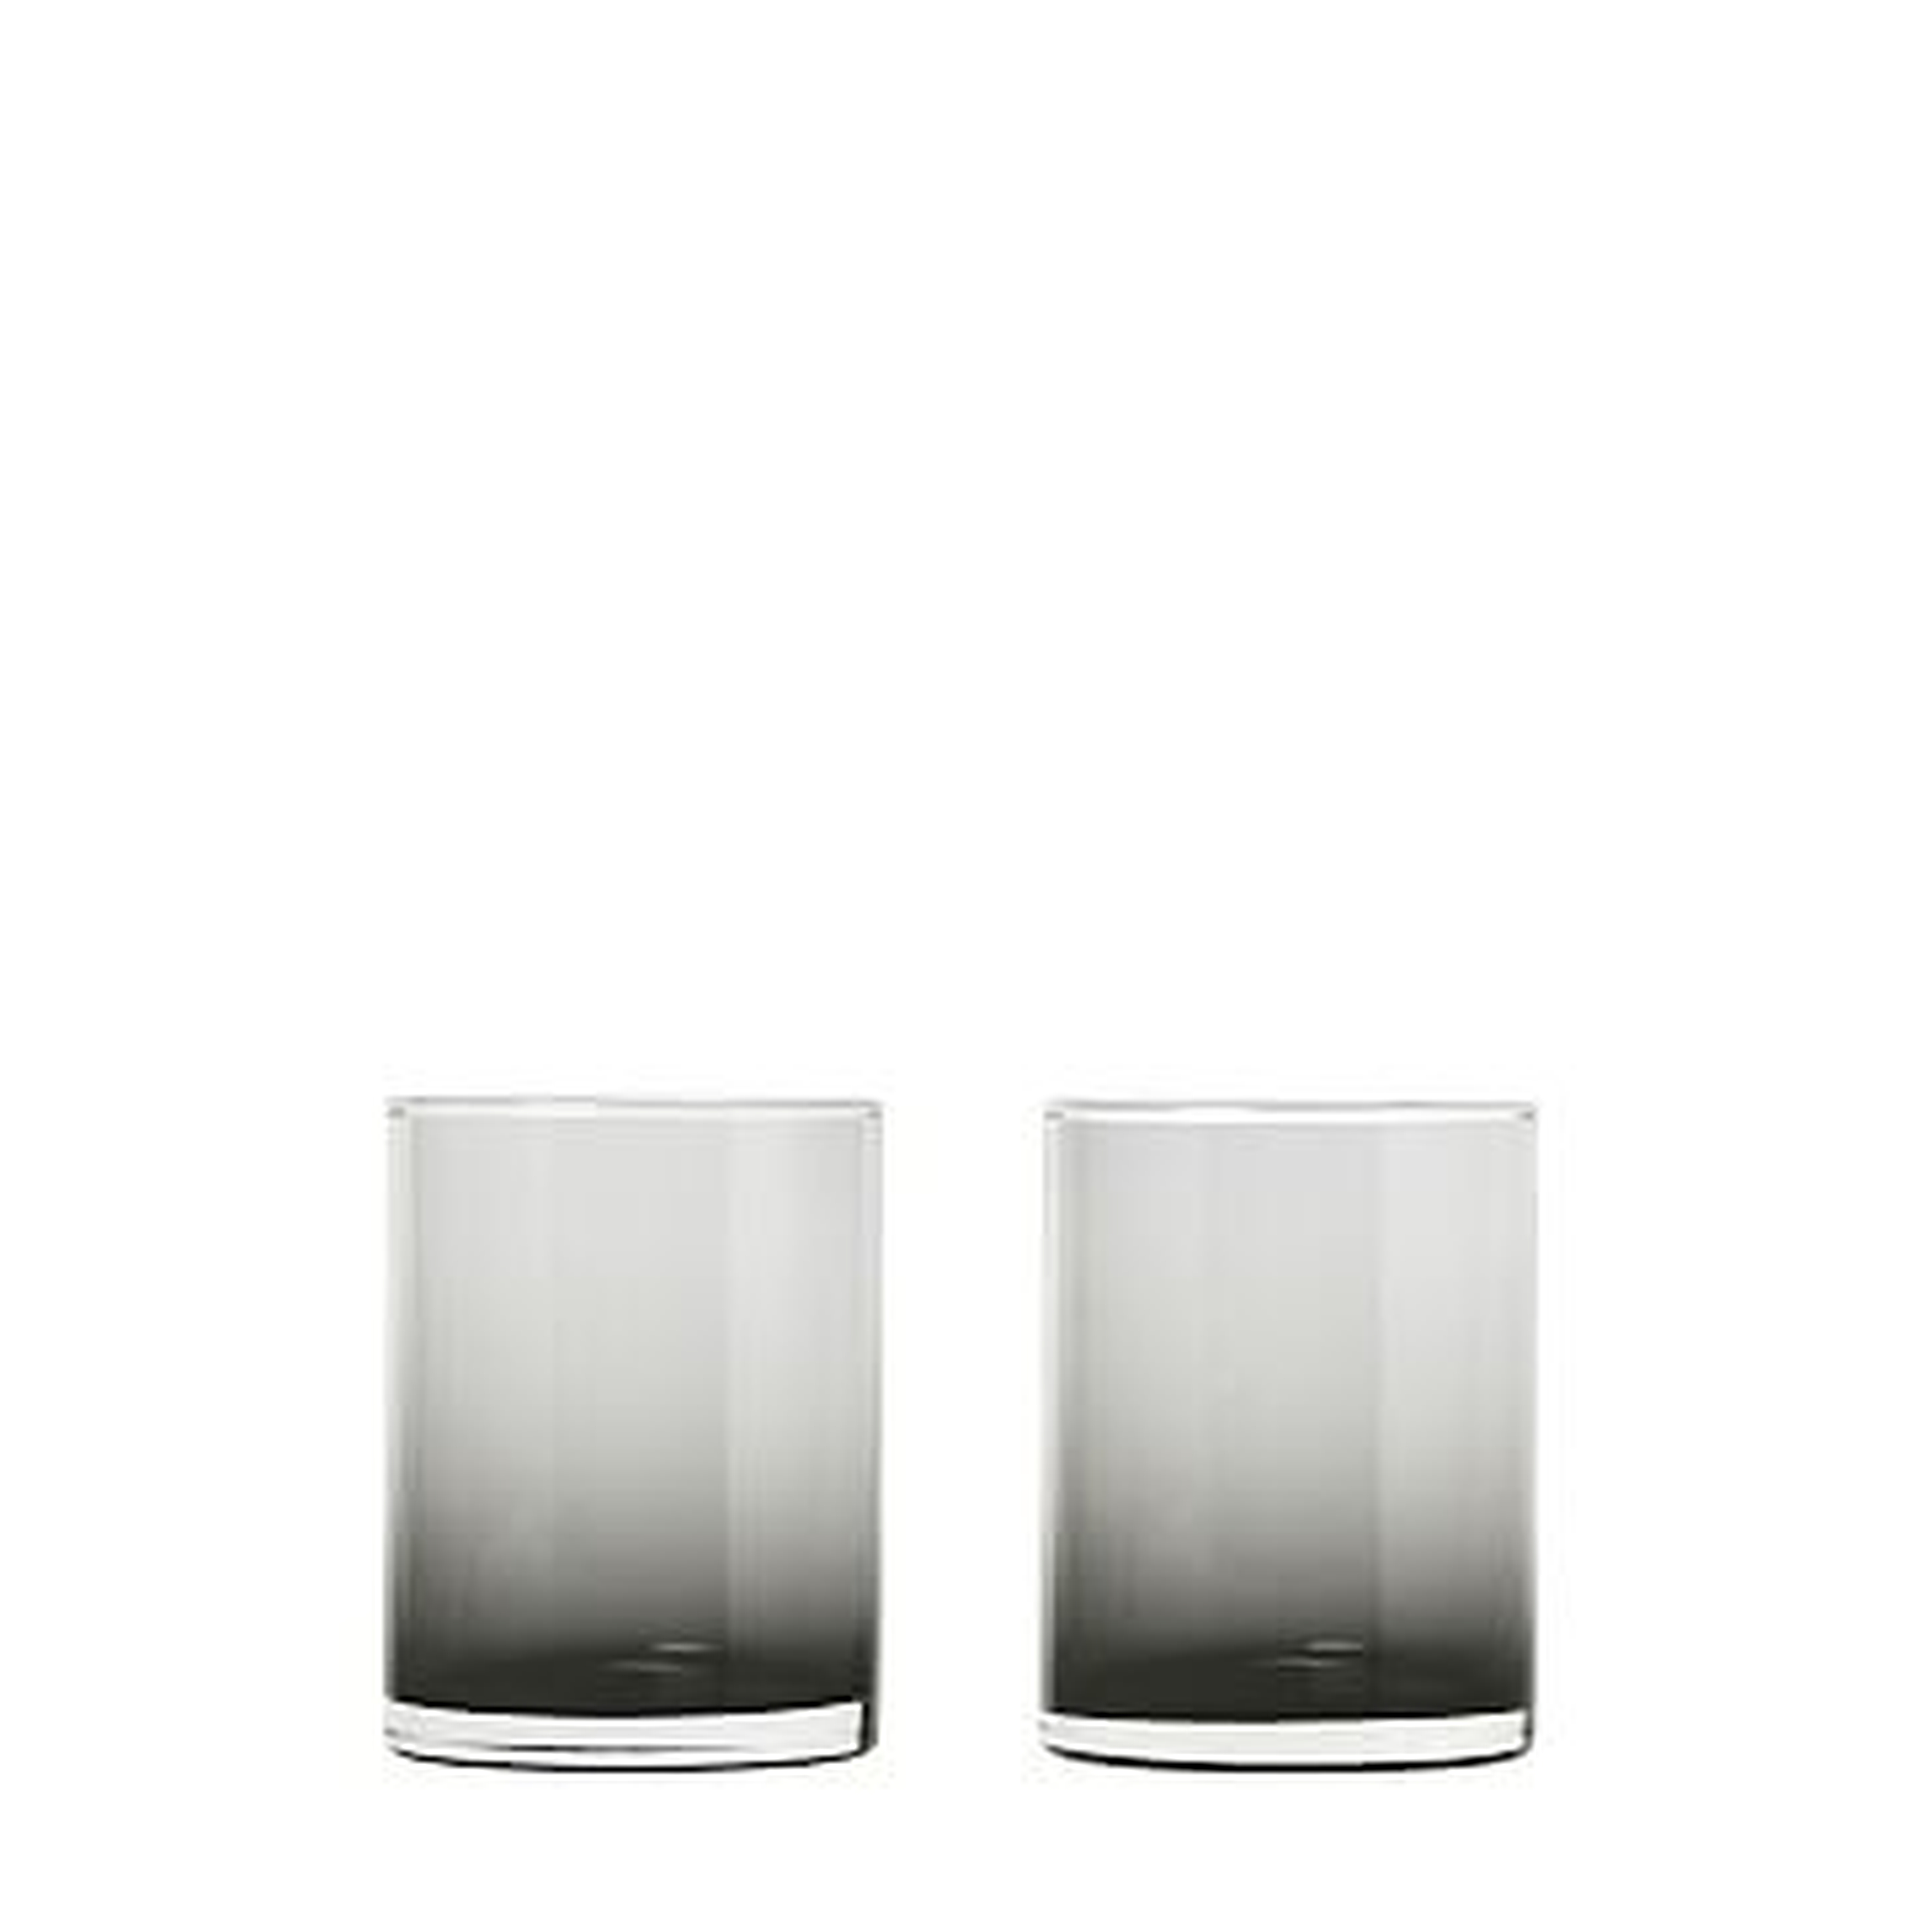 Mera Glassware, Tall, Smoke, Set of 2 - West Elm